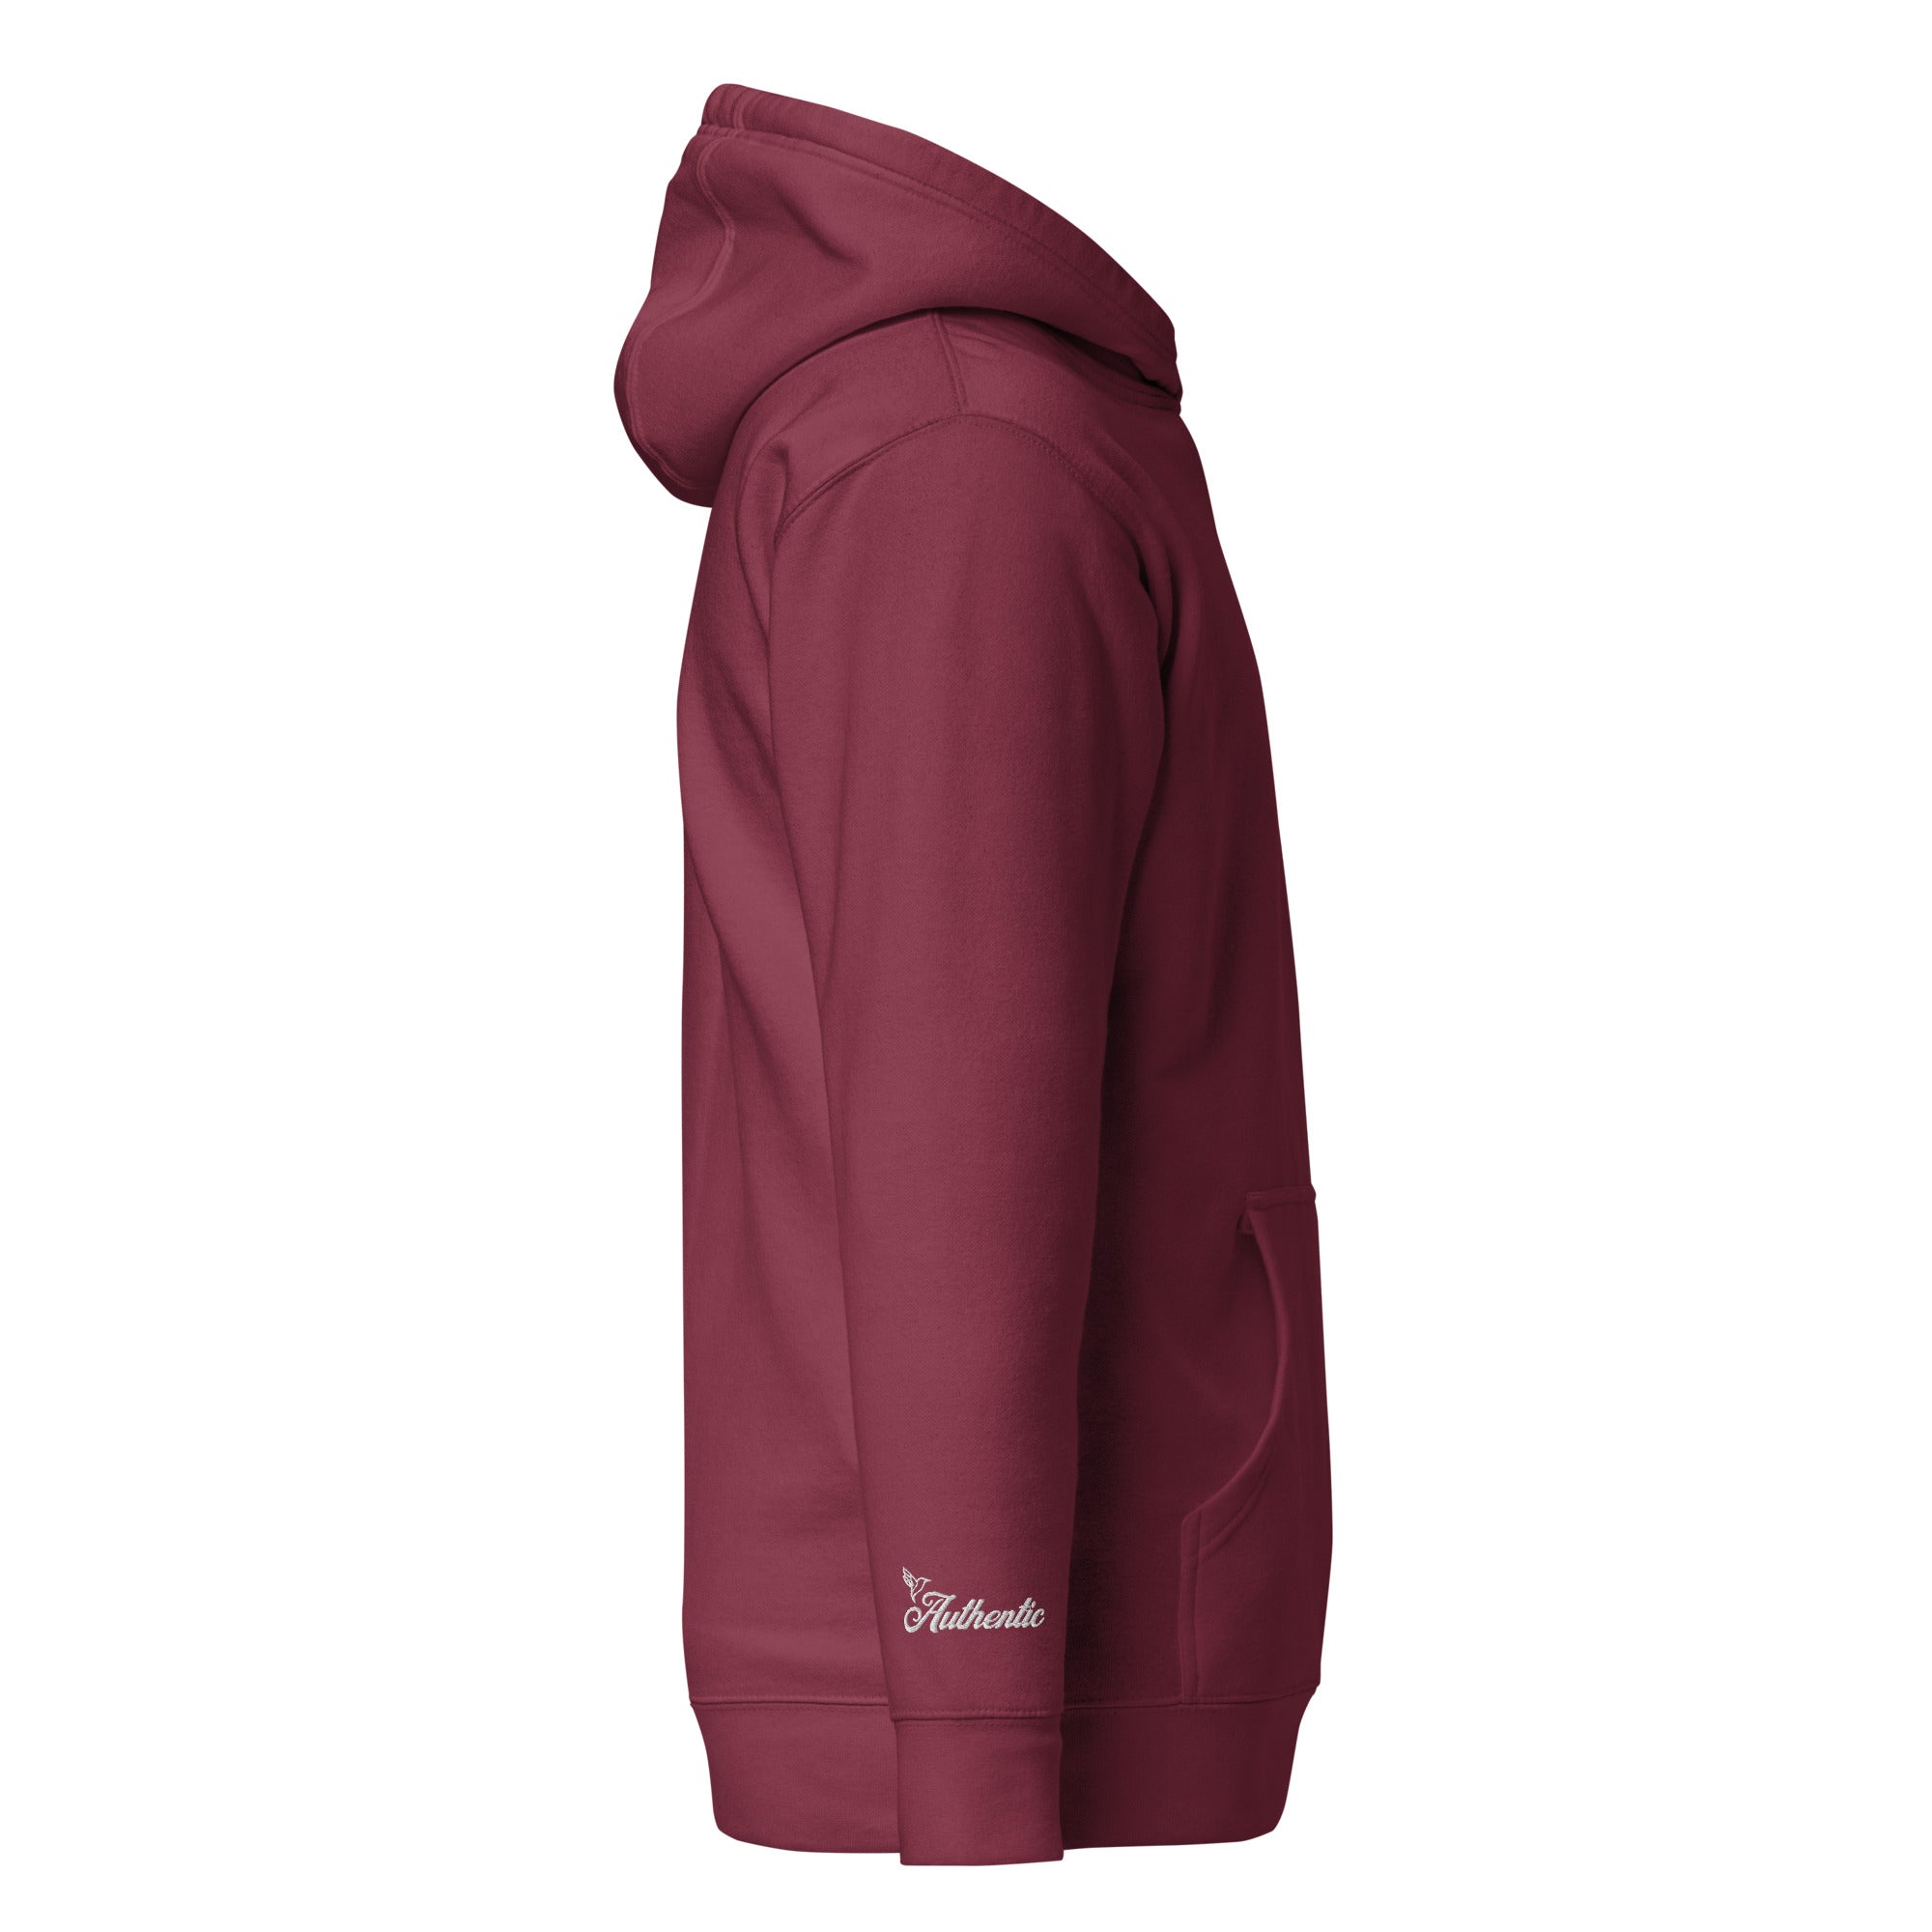 unisex-premium-hoodie-maroon-right-631fce5c50d89.jpg